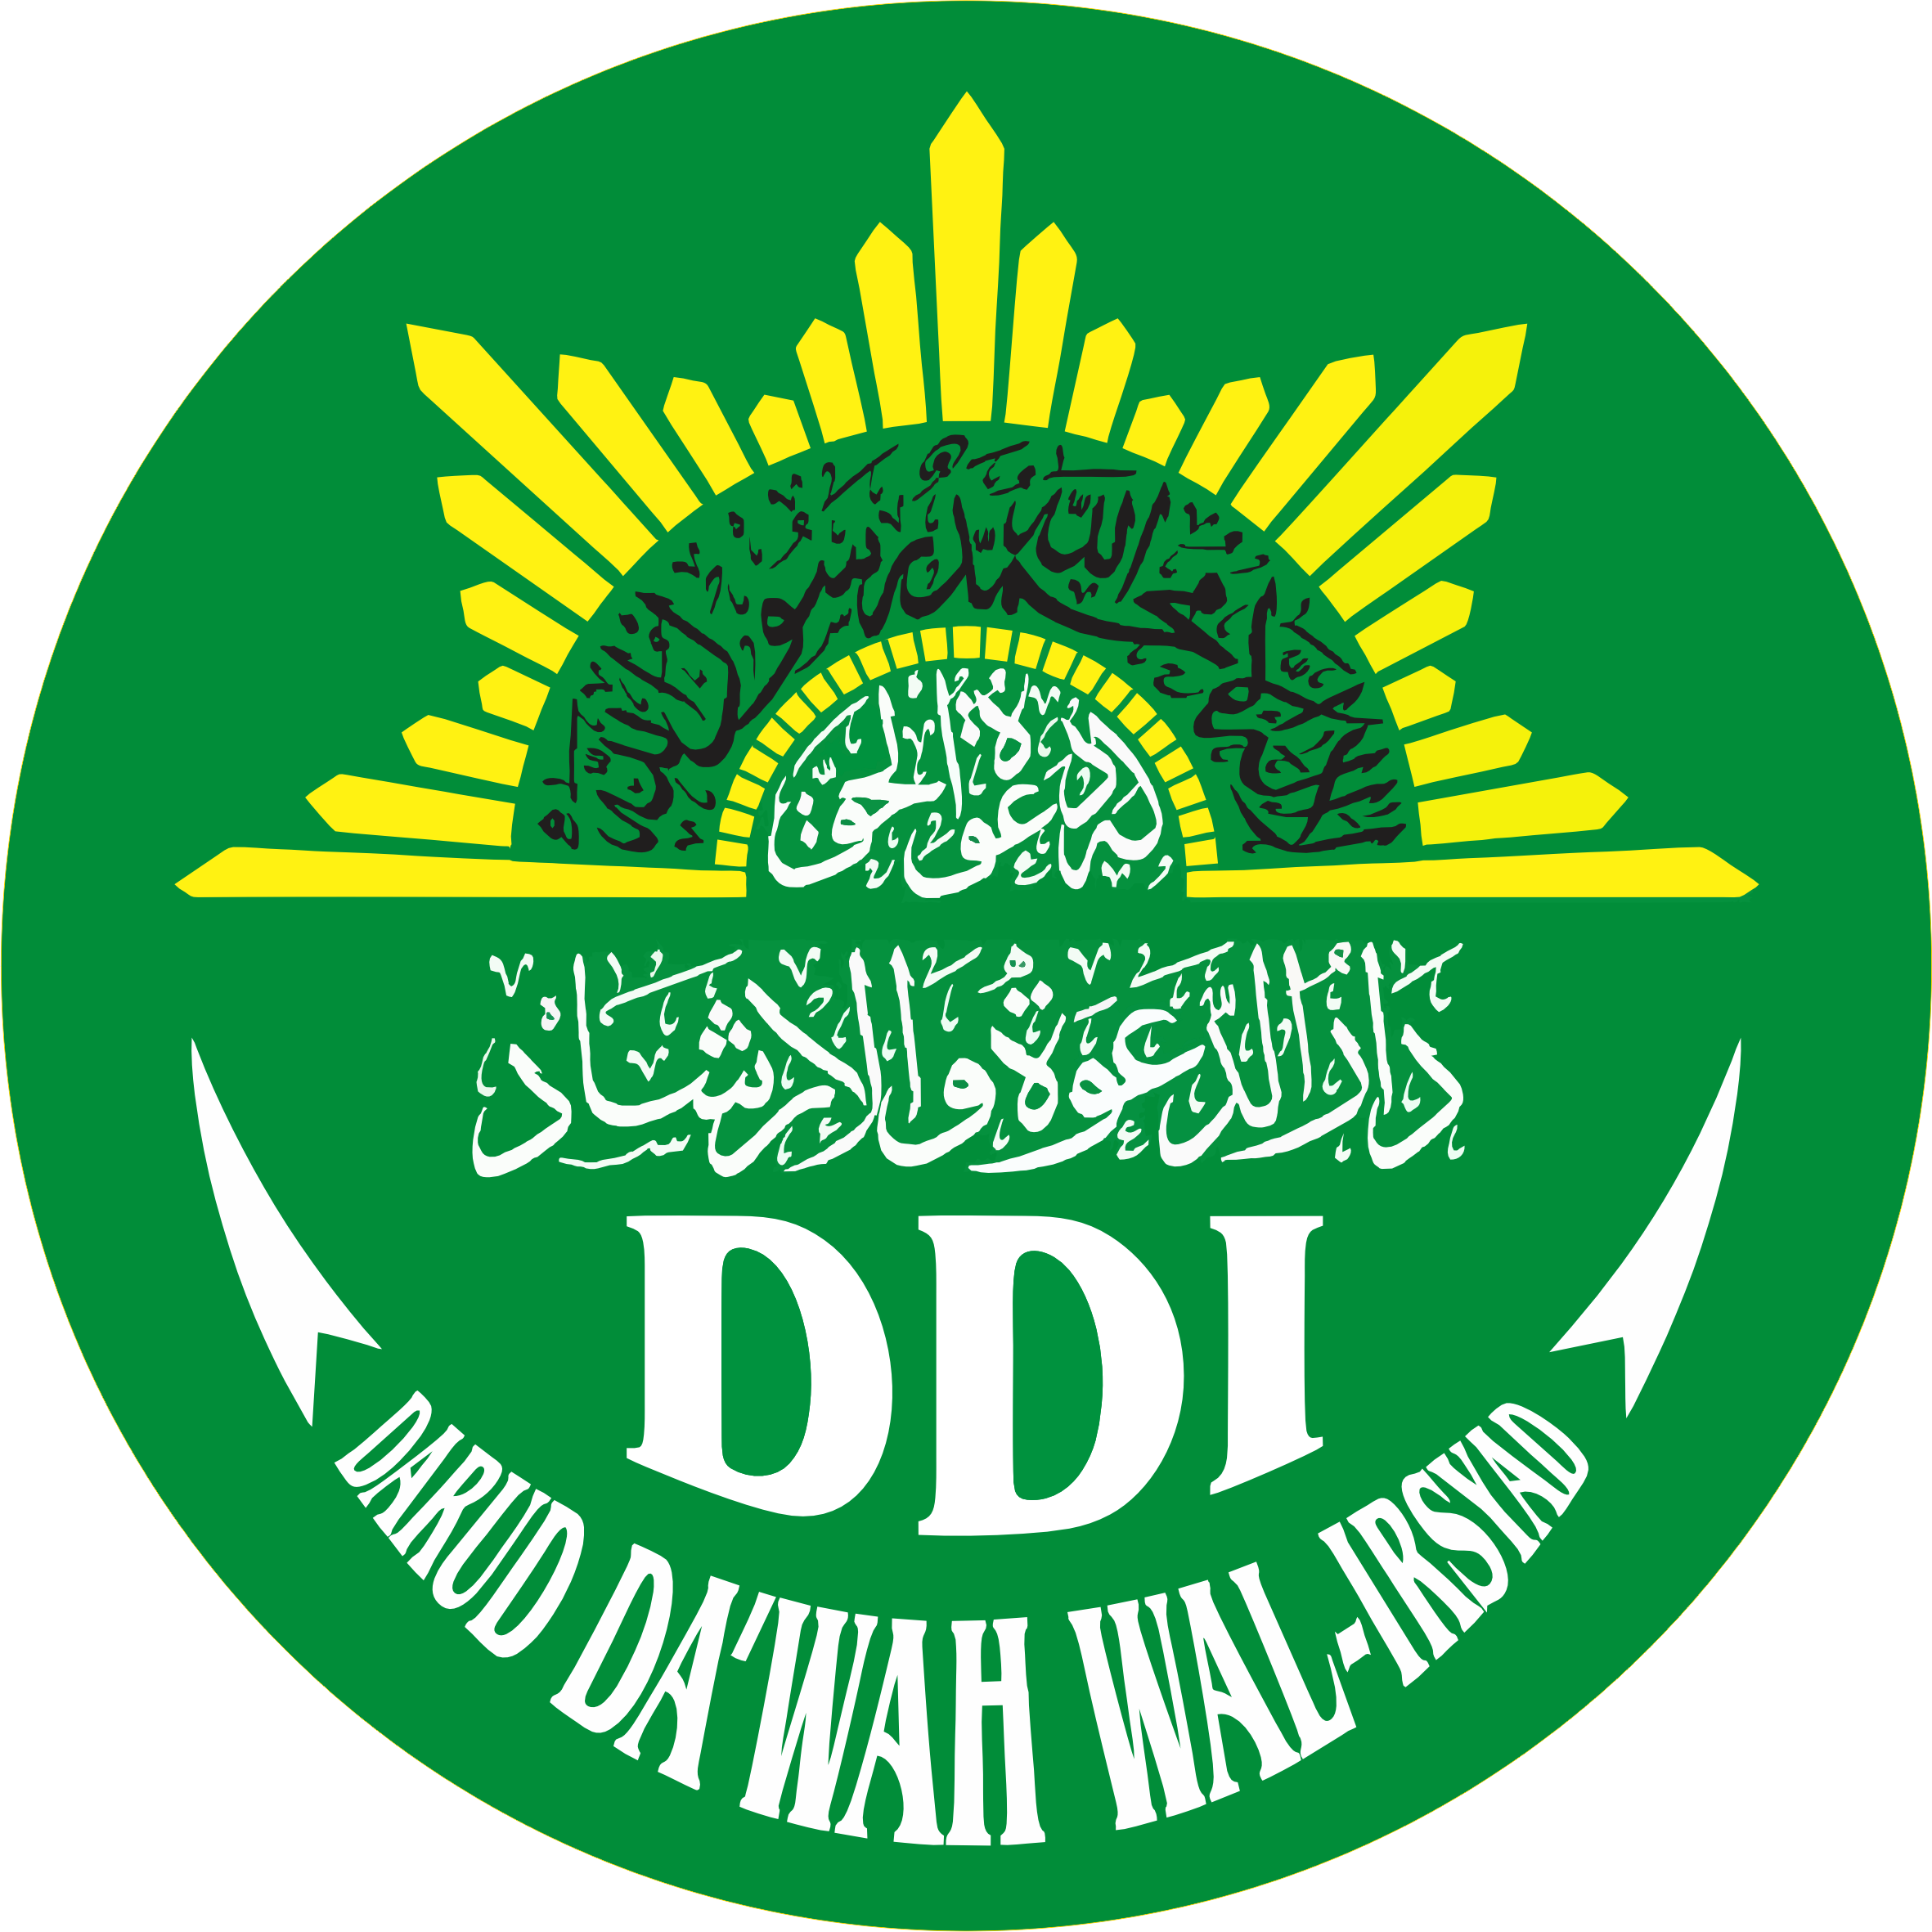 Madrasah Tsanawiyah DDI Kanang